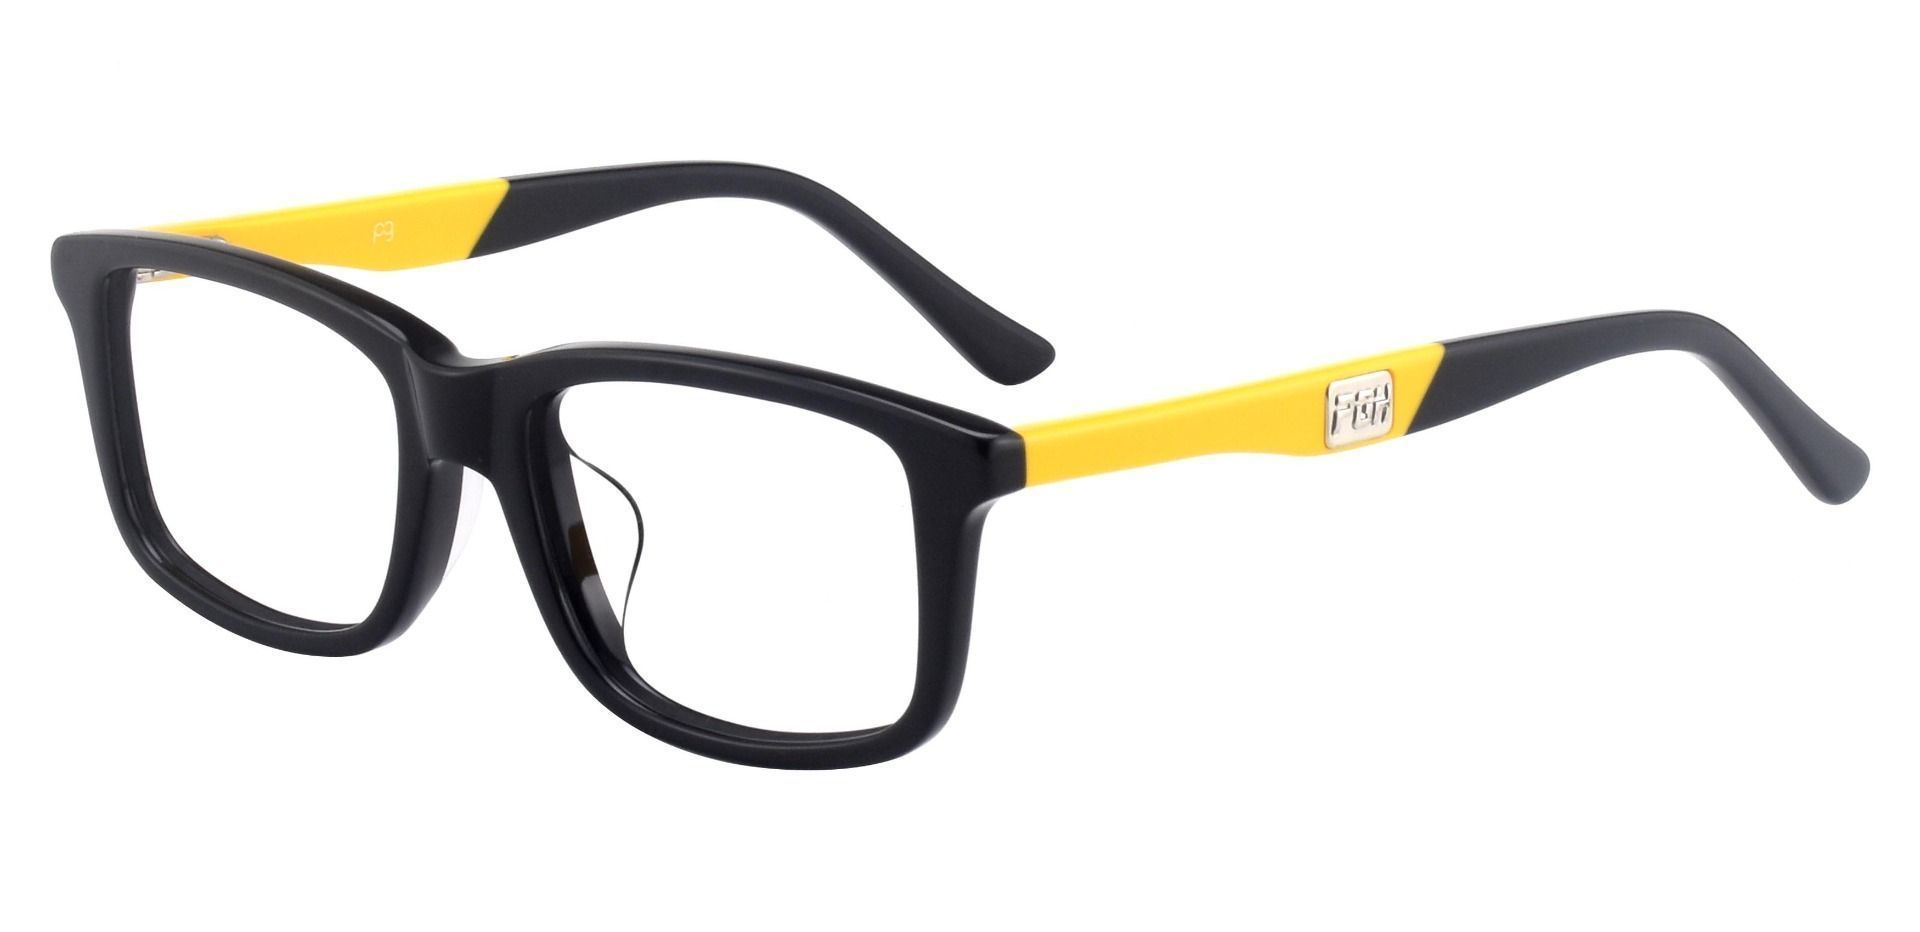 Allegheny Rectangle Prescription Glasses - Black-yellow